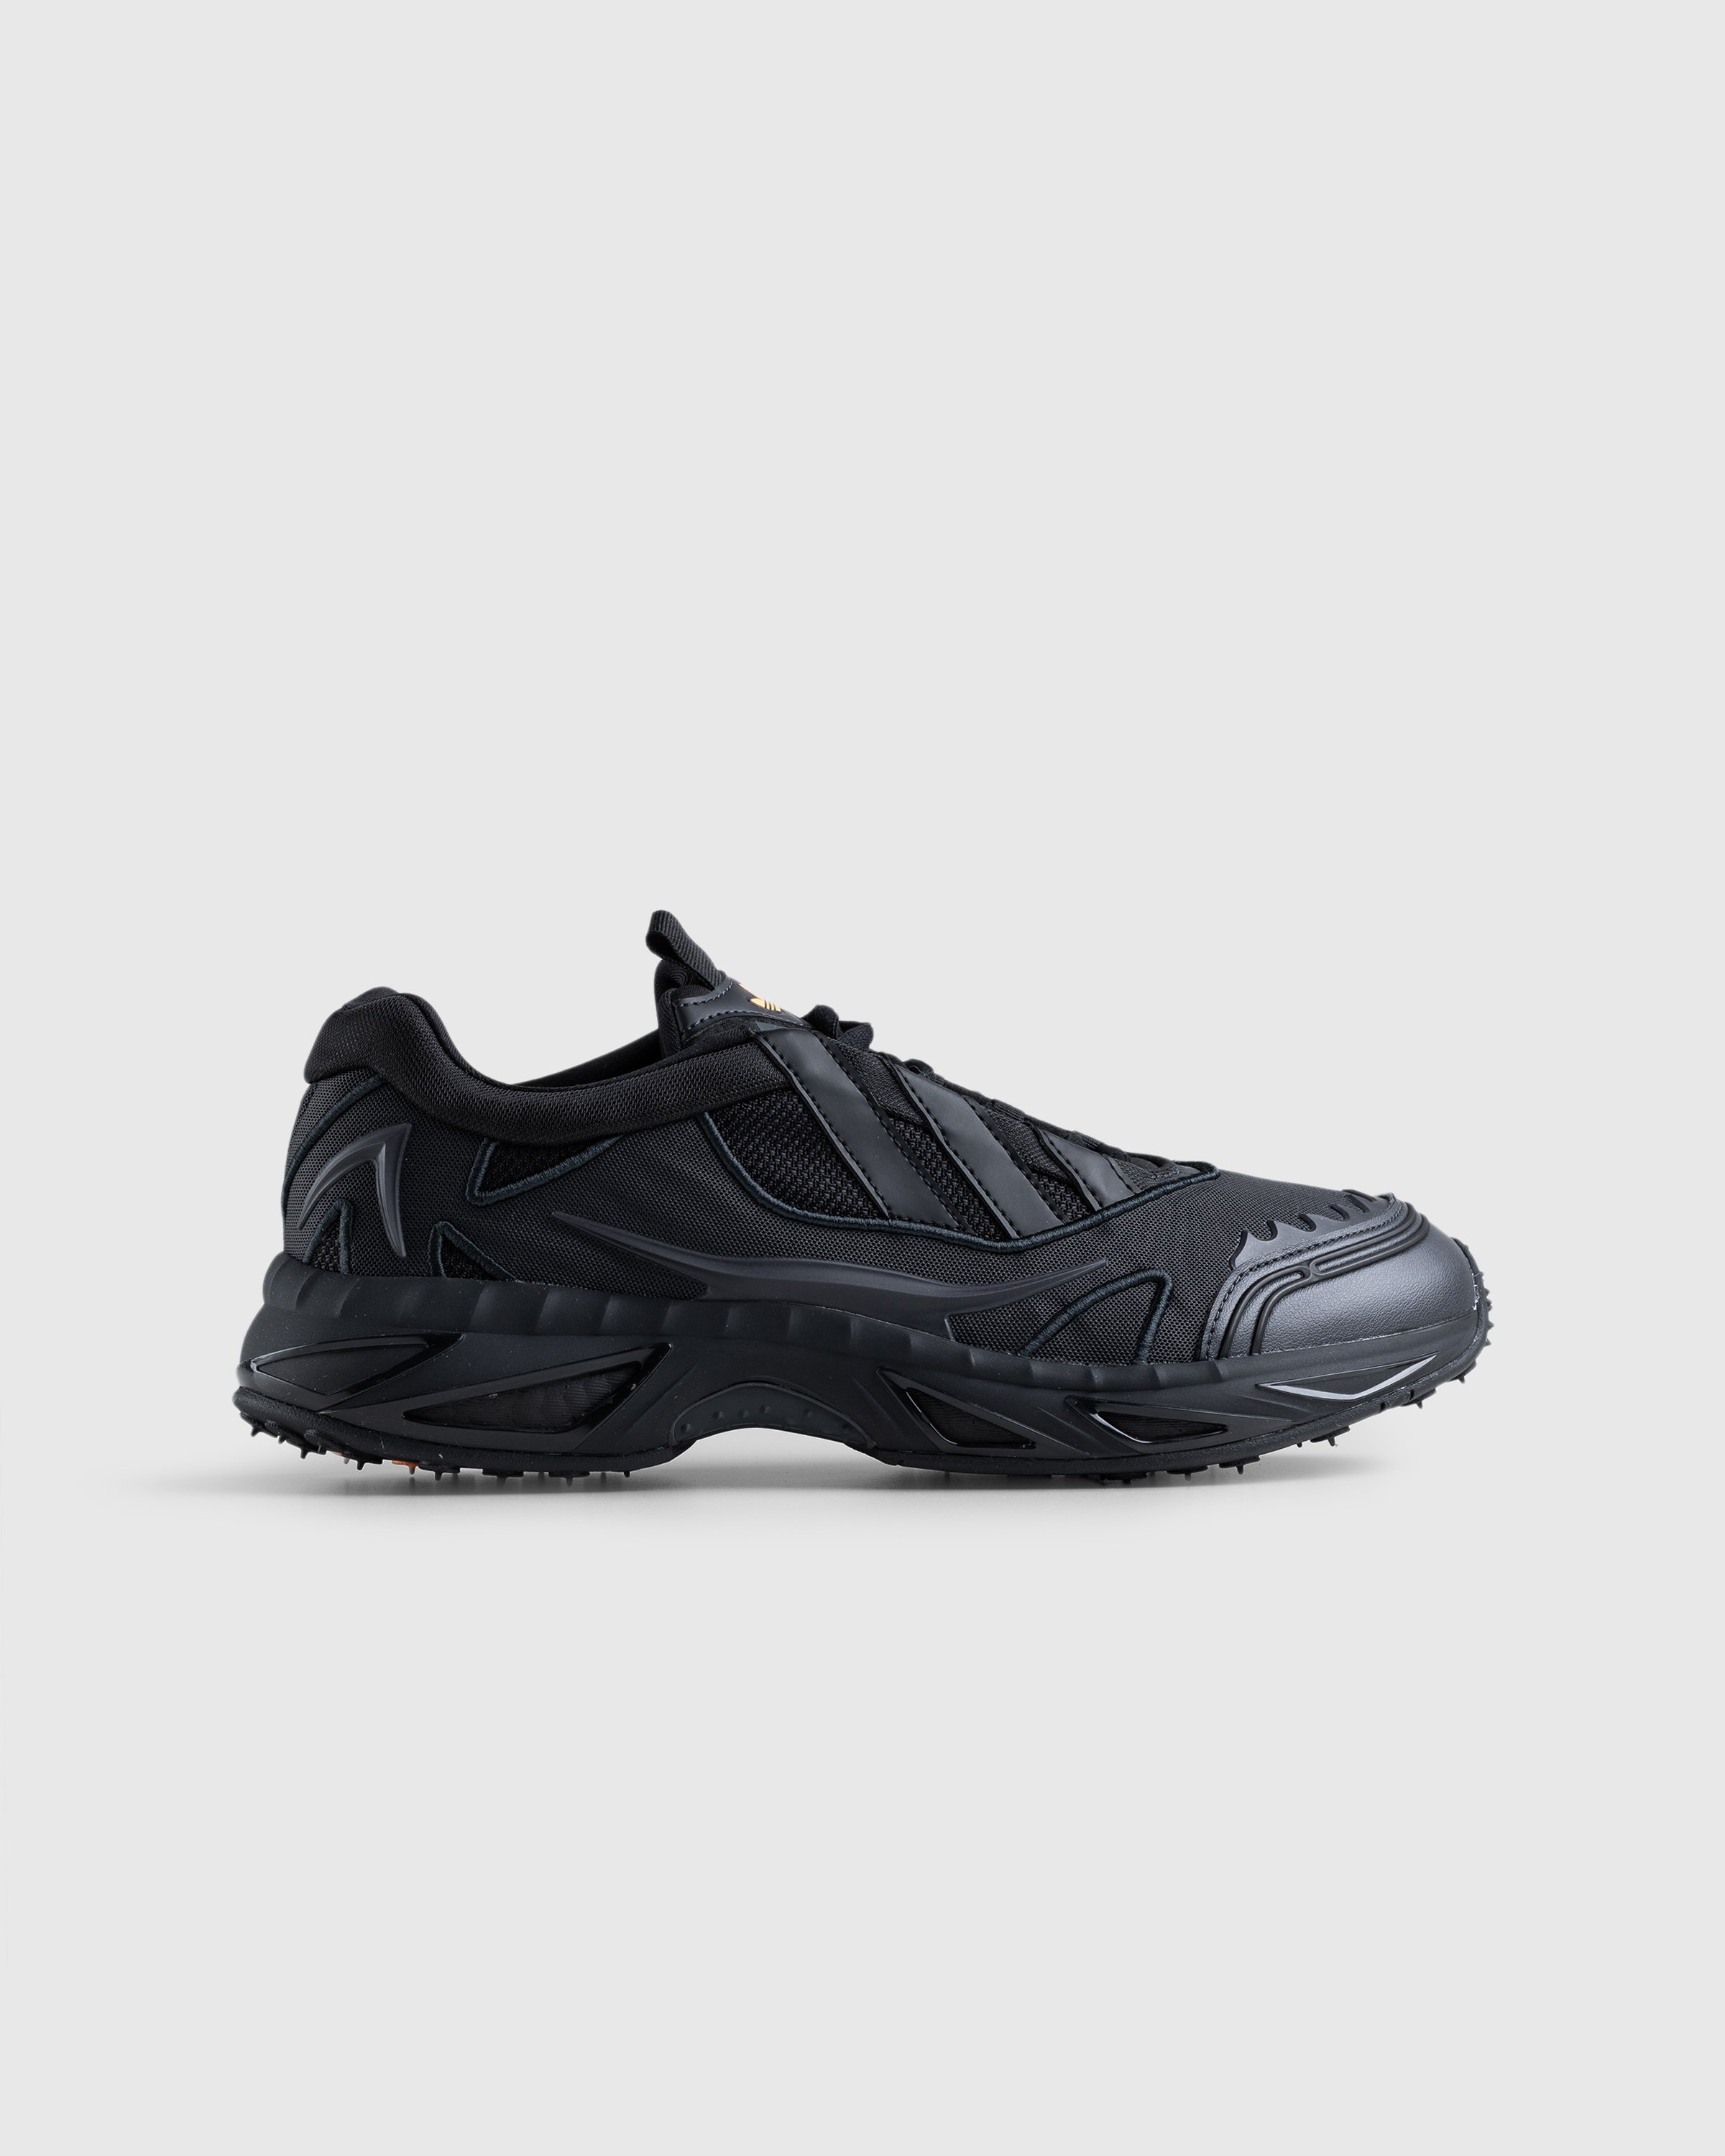 Adidas - Xare Boost Black - Footwear - Black - Image 1